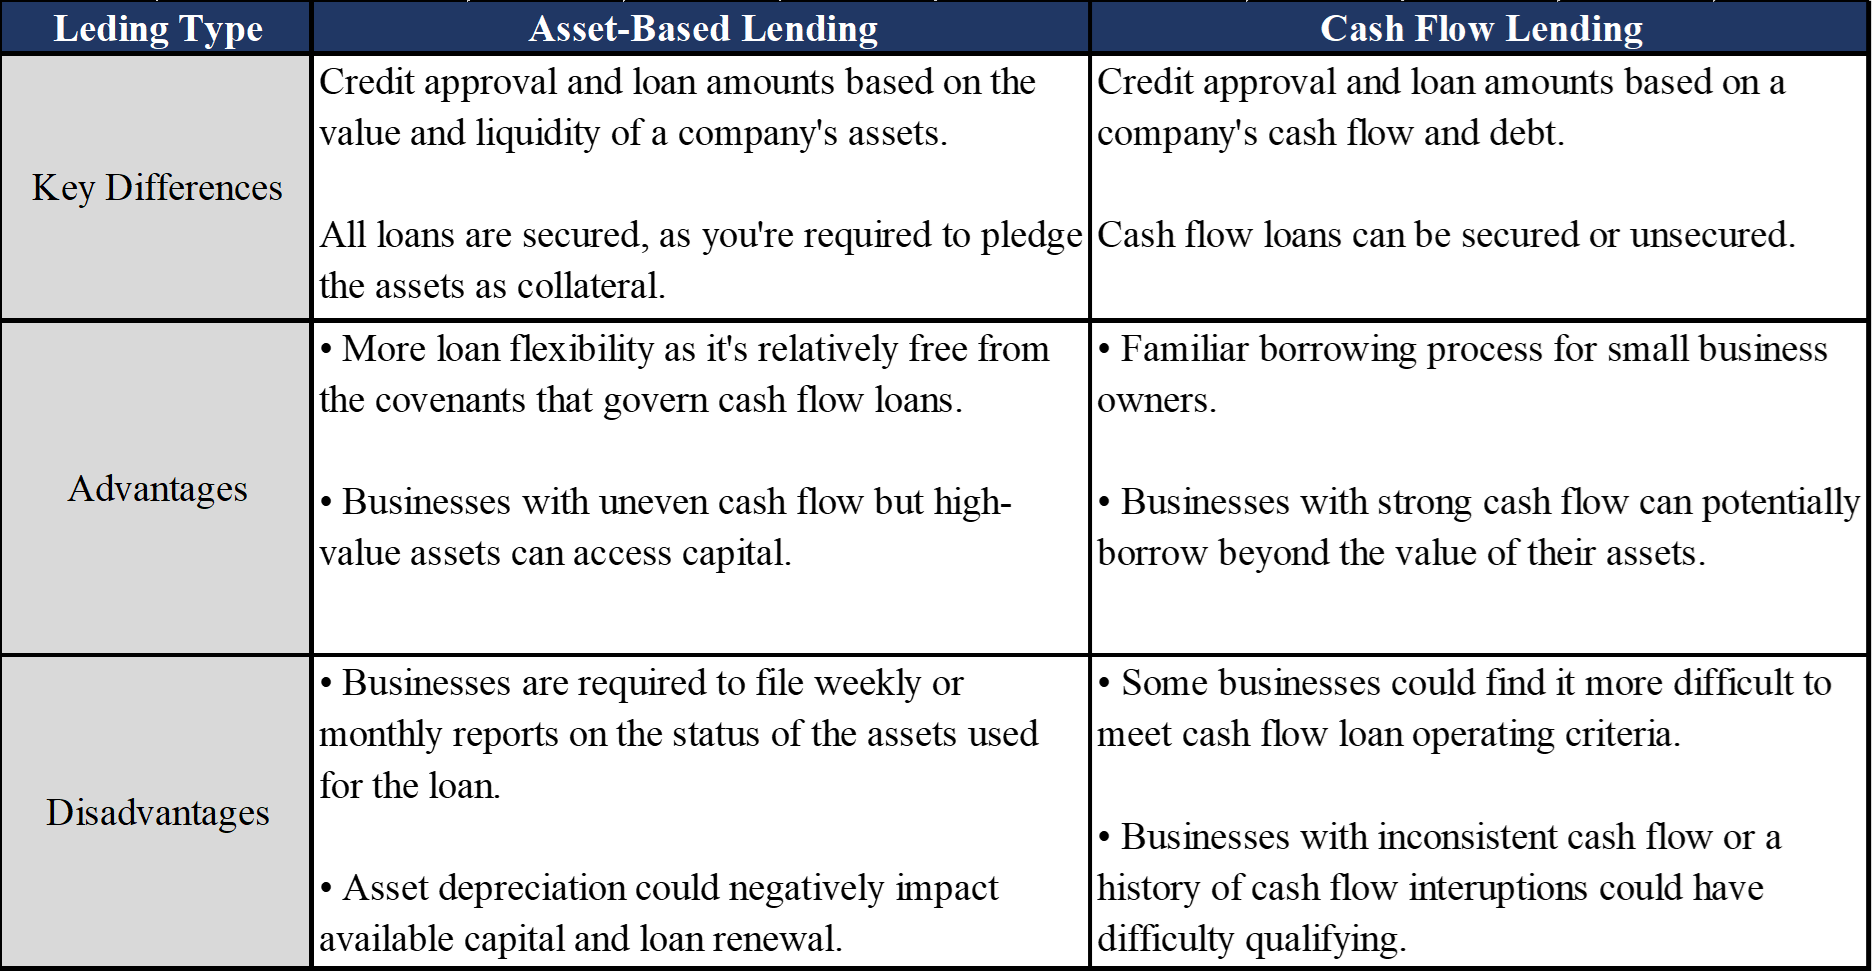 Cash flow lender vs asset-based lender comparison table